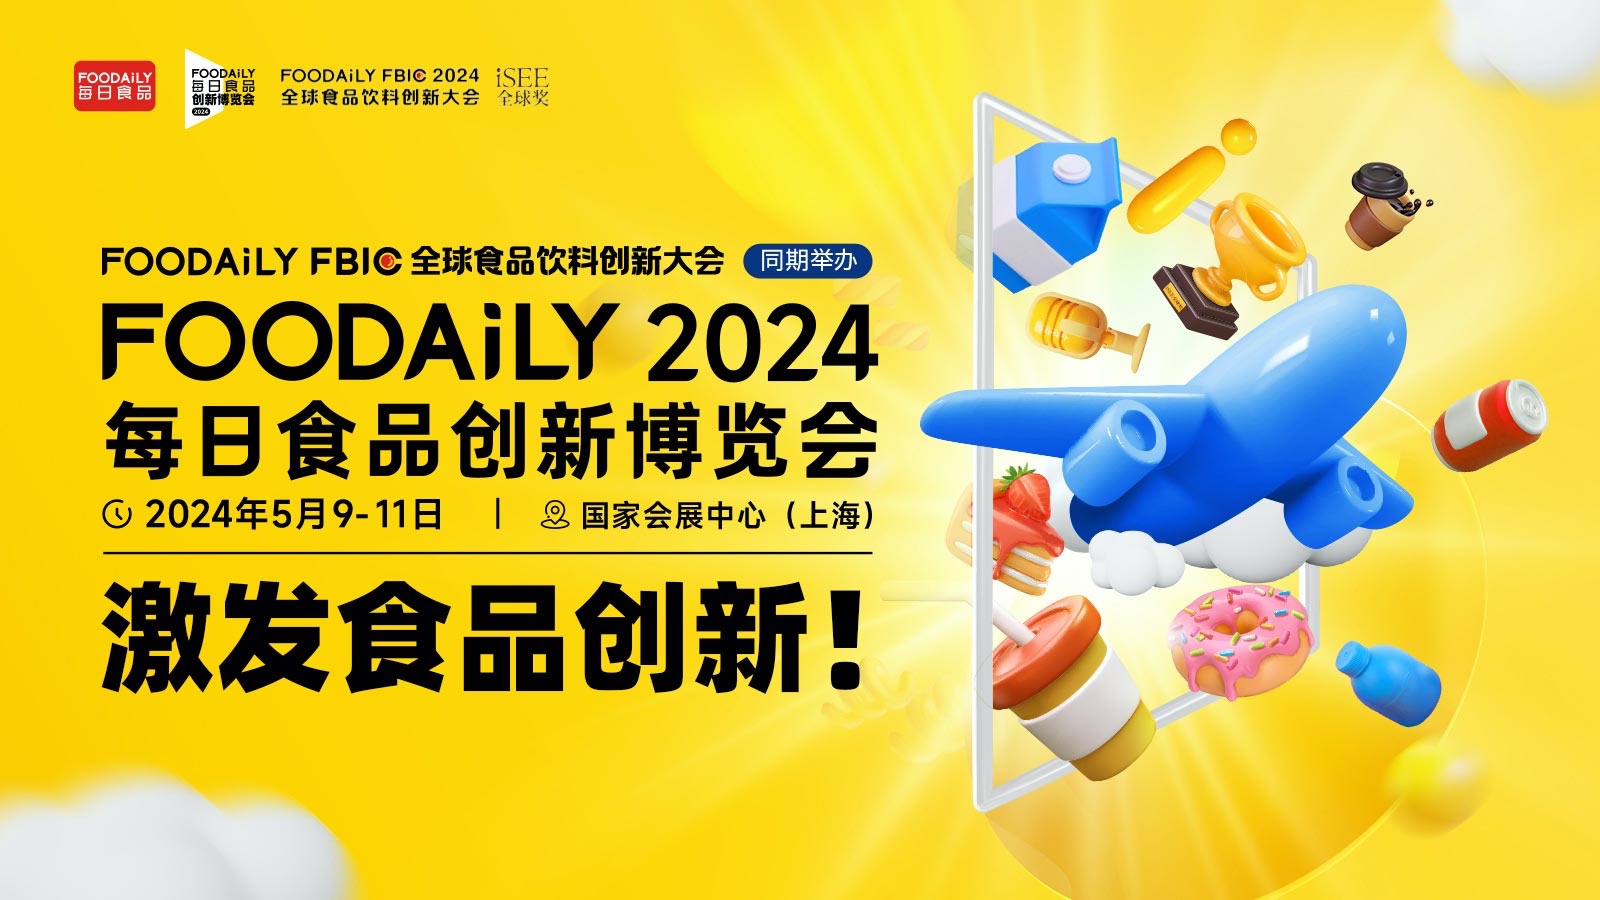 Foodaily 2024每日食品创新博览会-大号会展 www.dahaoexpo.com